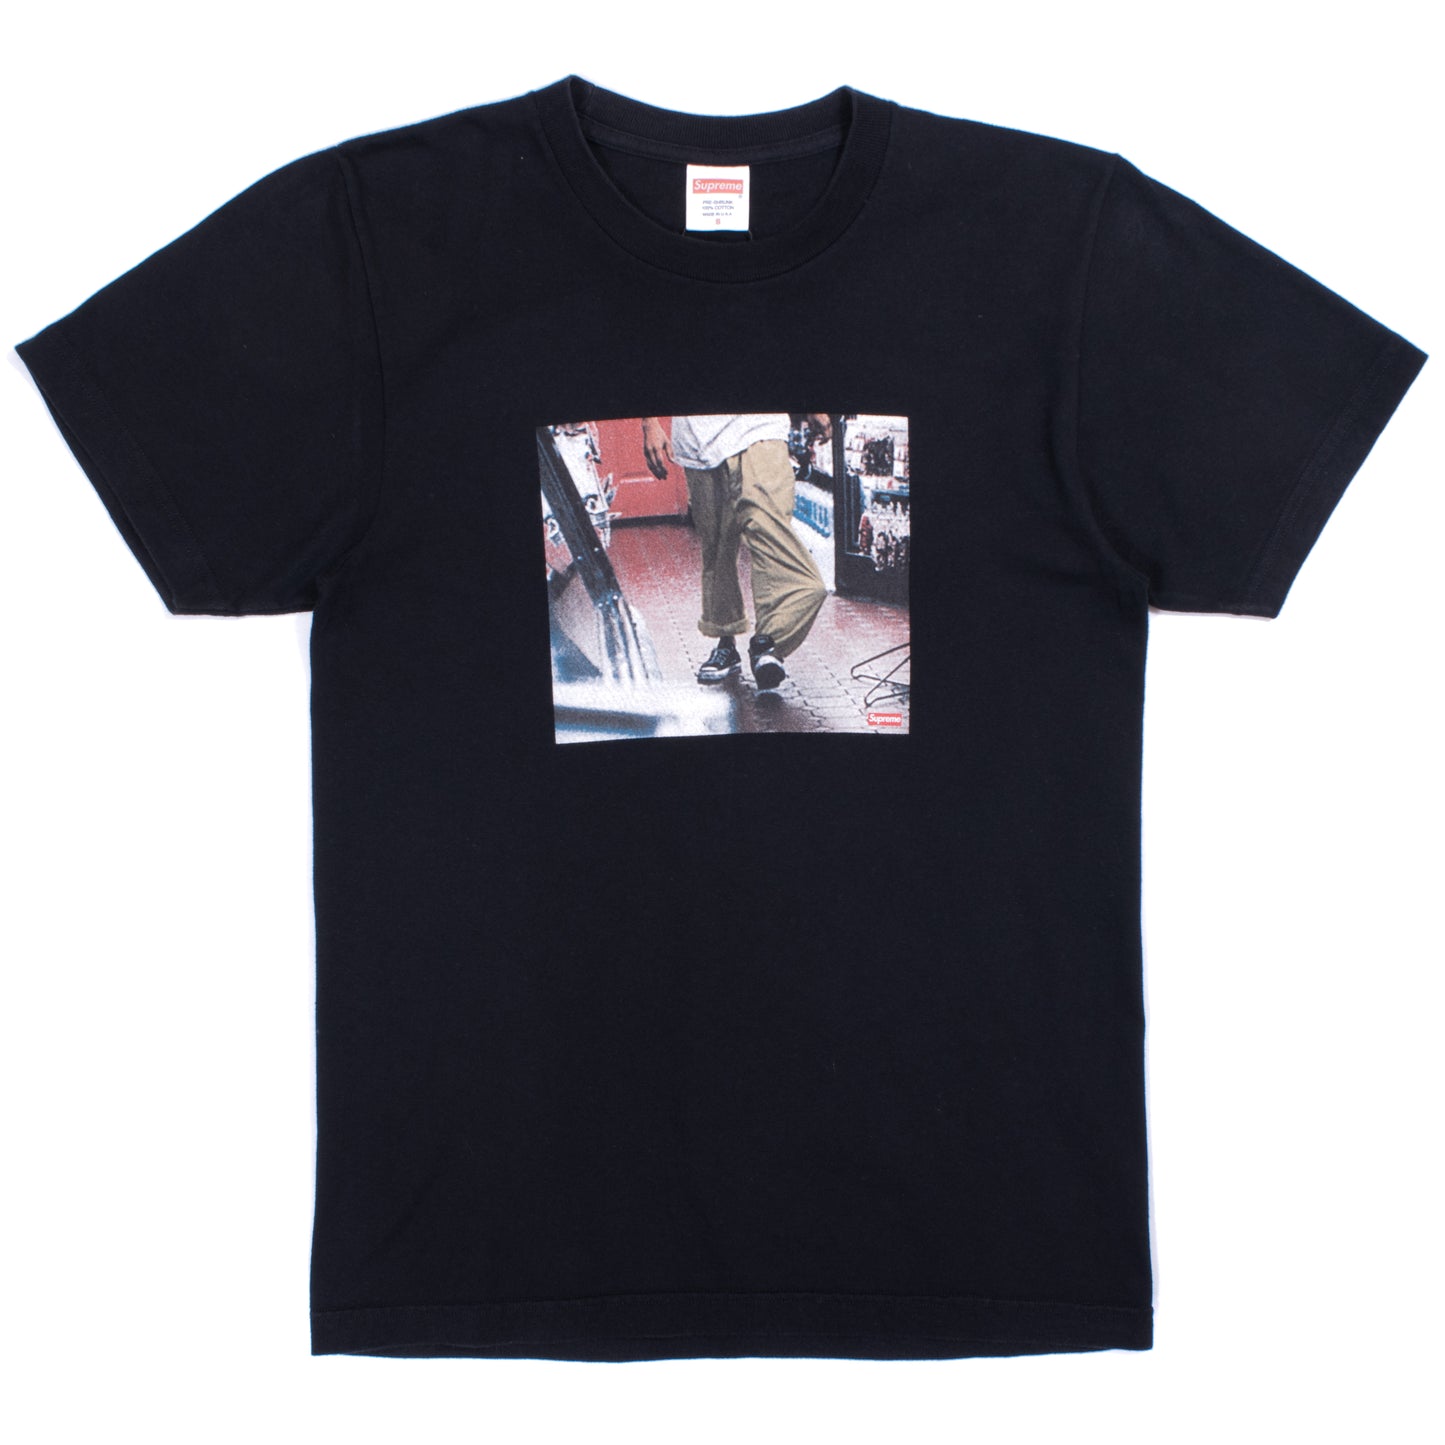 Supreme Kids 20th Anniversary "40 oz." T-Shirt (2015SS)